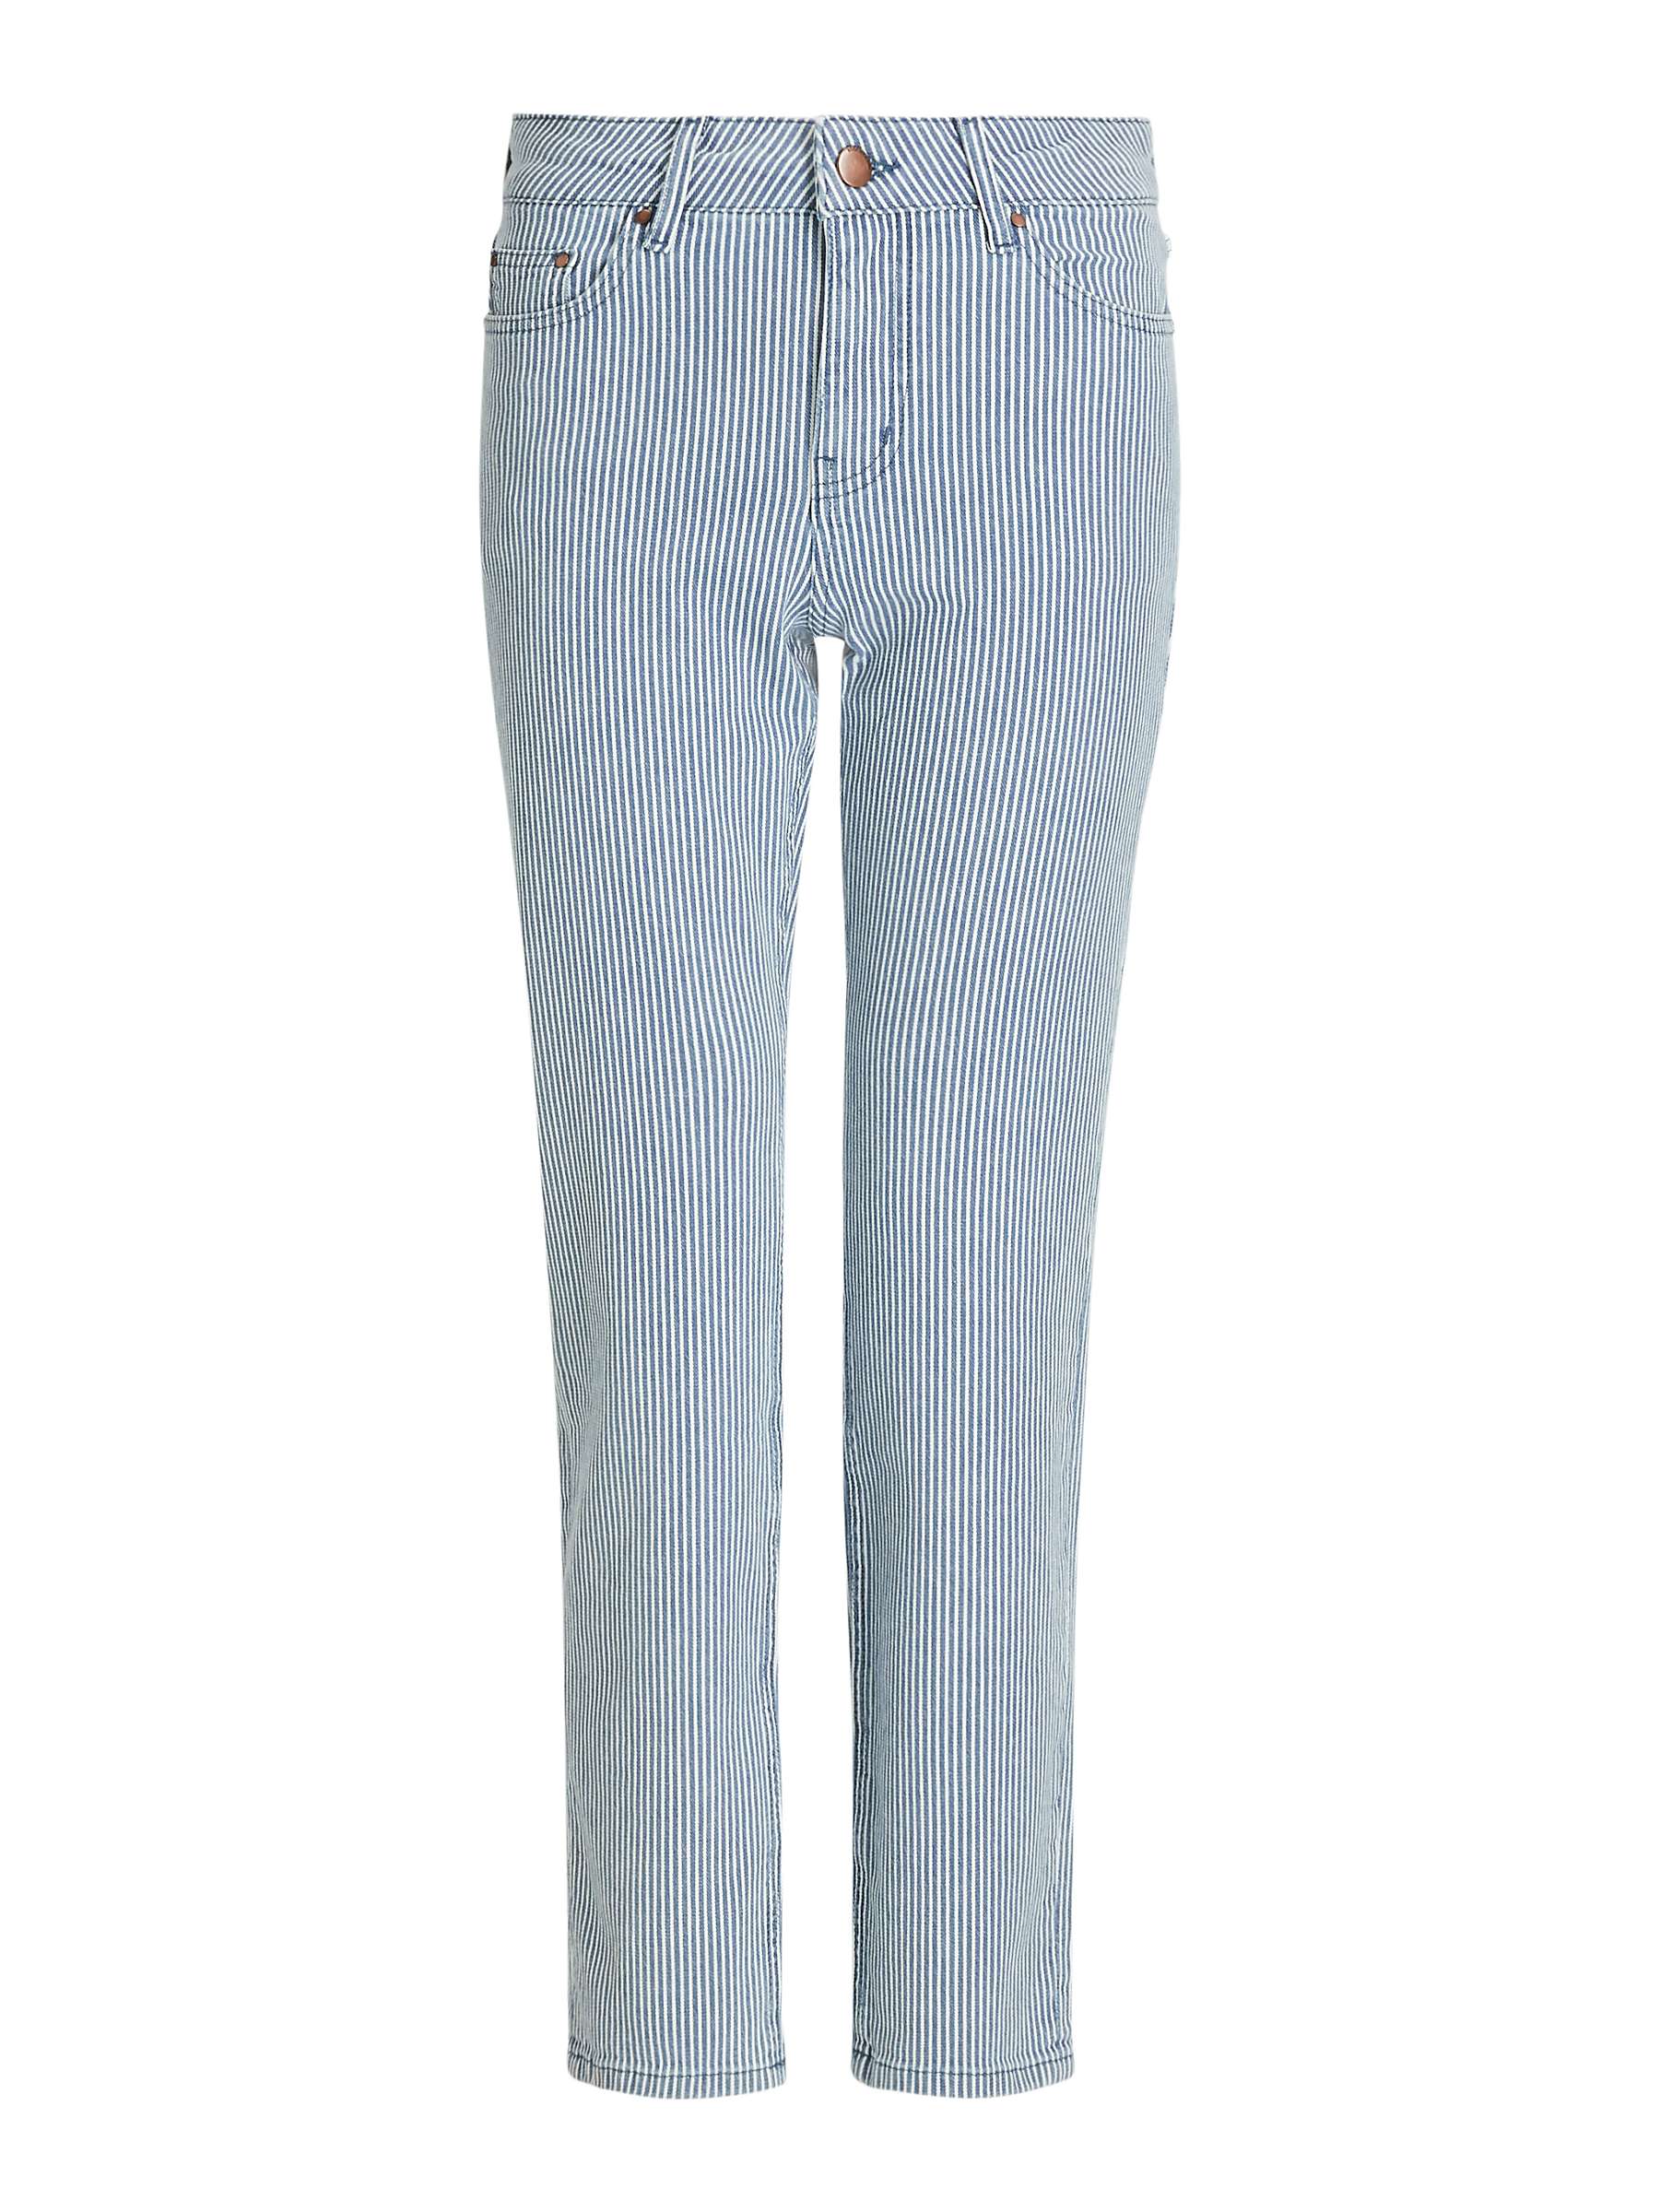 Buy Boden Slim Skimmer Ticking Stripe Crop Jeans, Blue Online at johnlewis.com